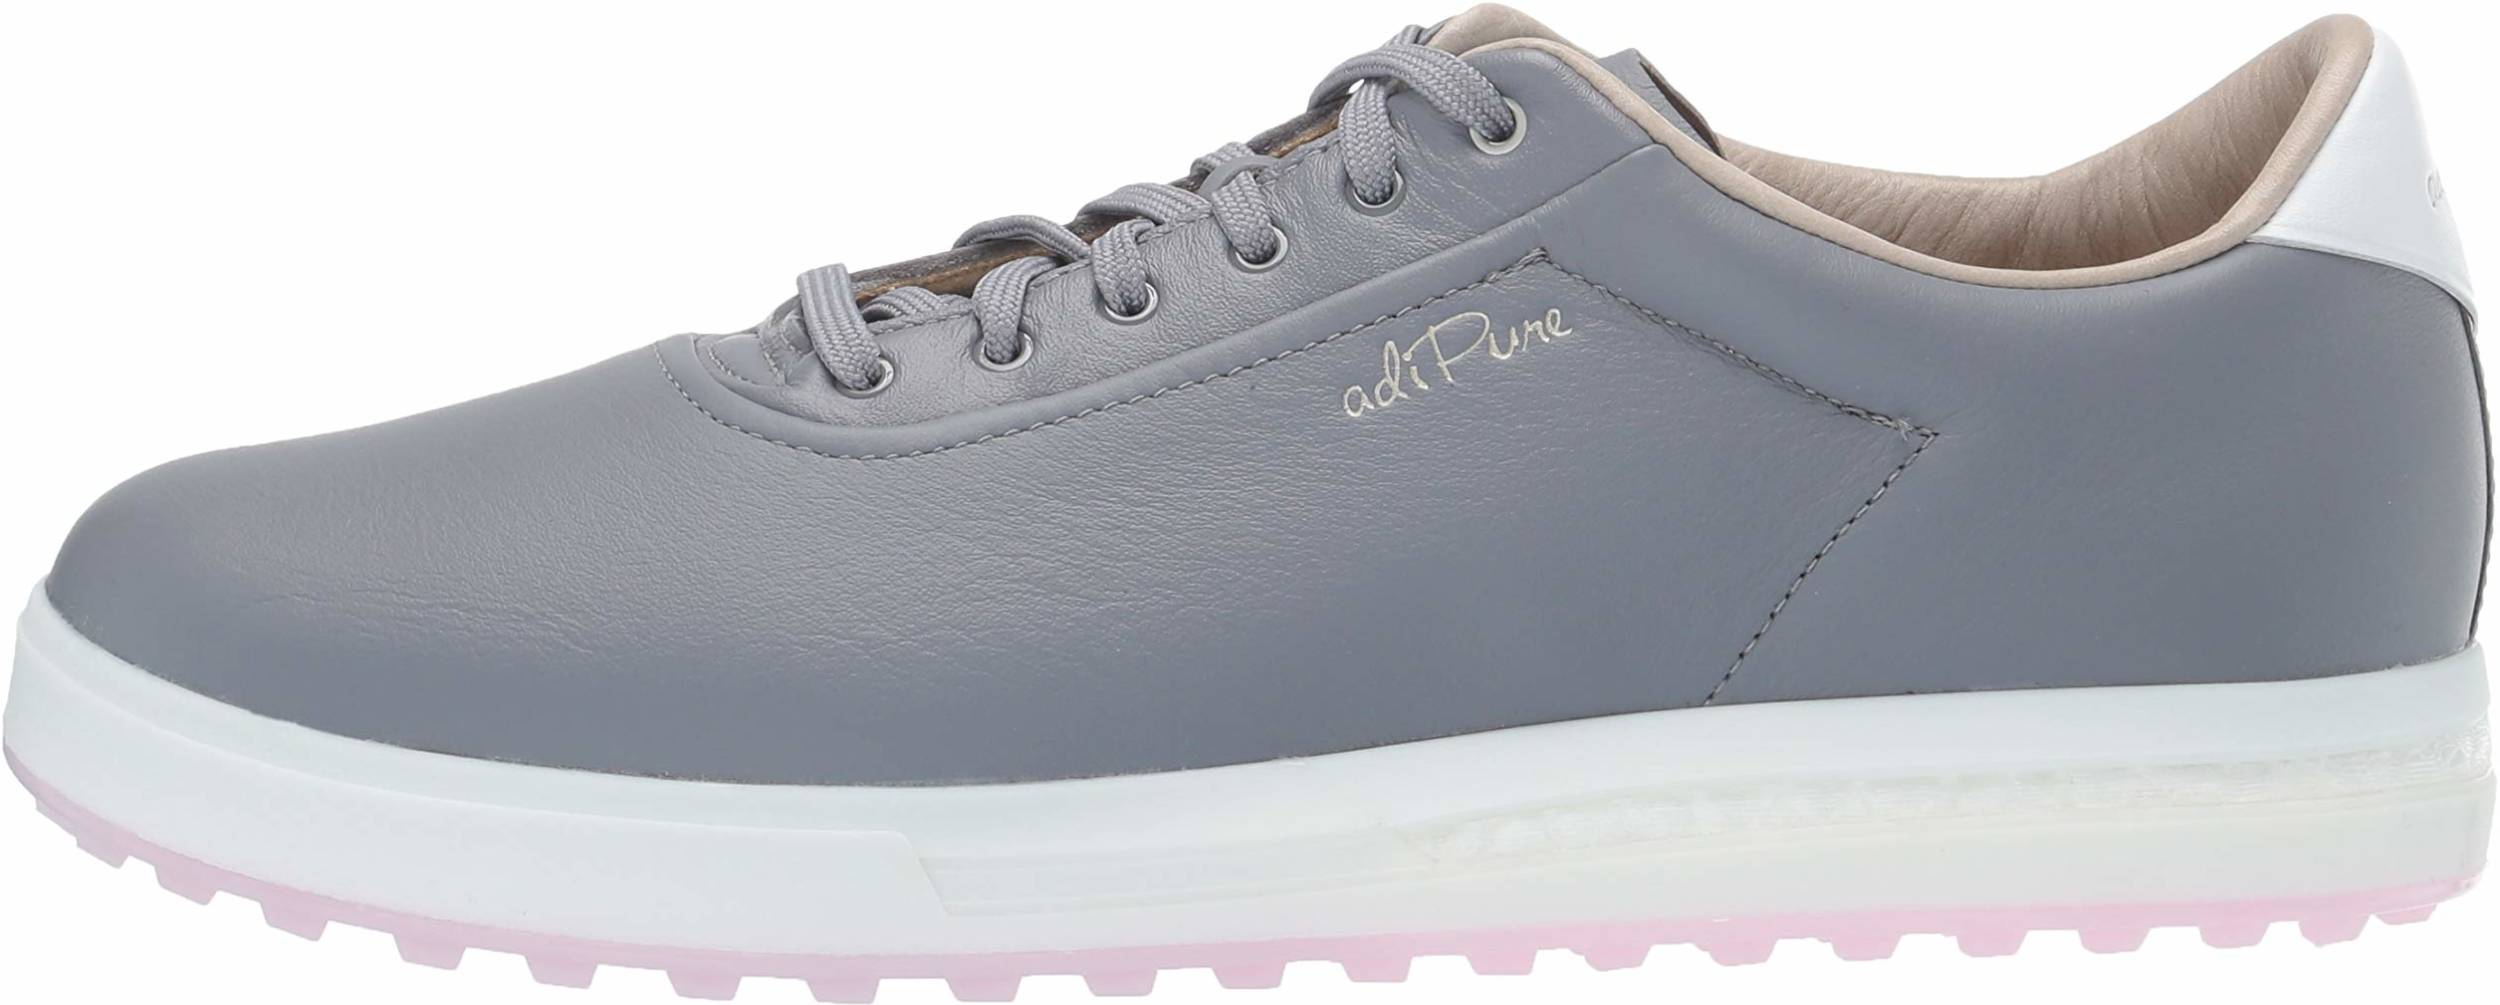 adidas mens adipure sp spikeless golf shoes